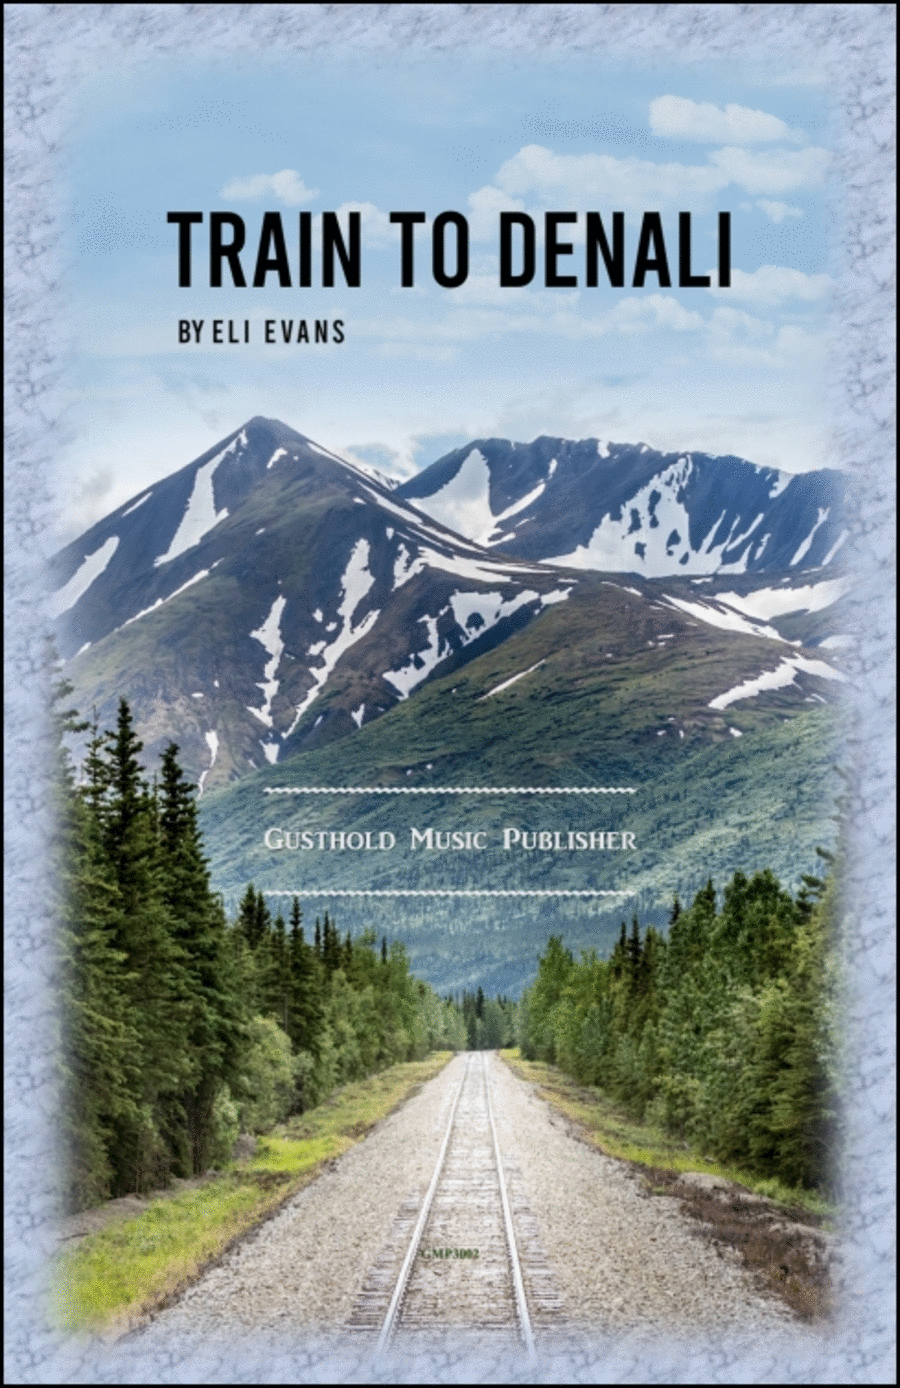 Train to Denali